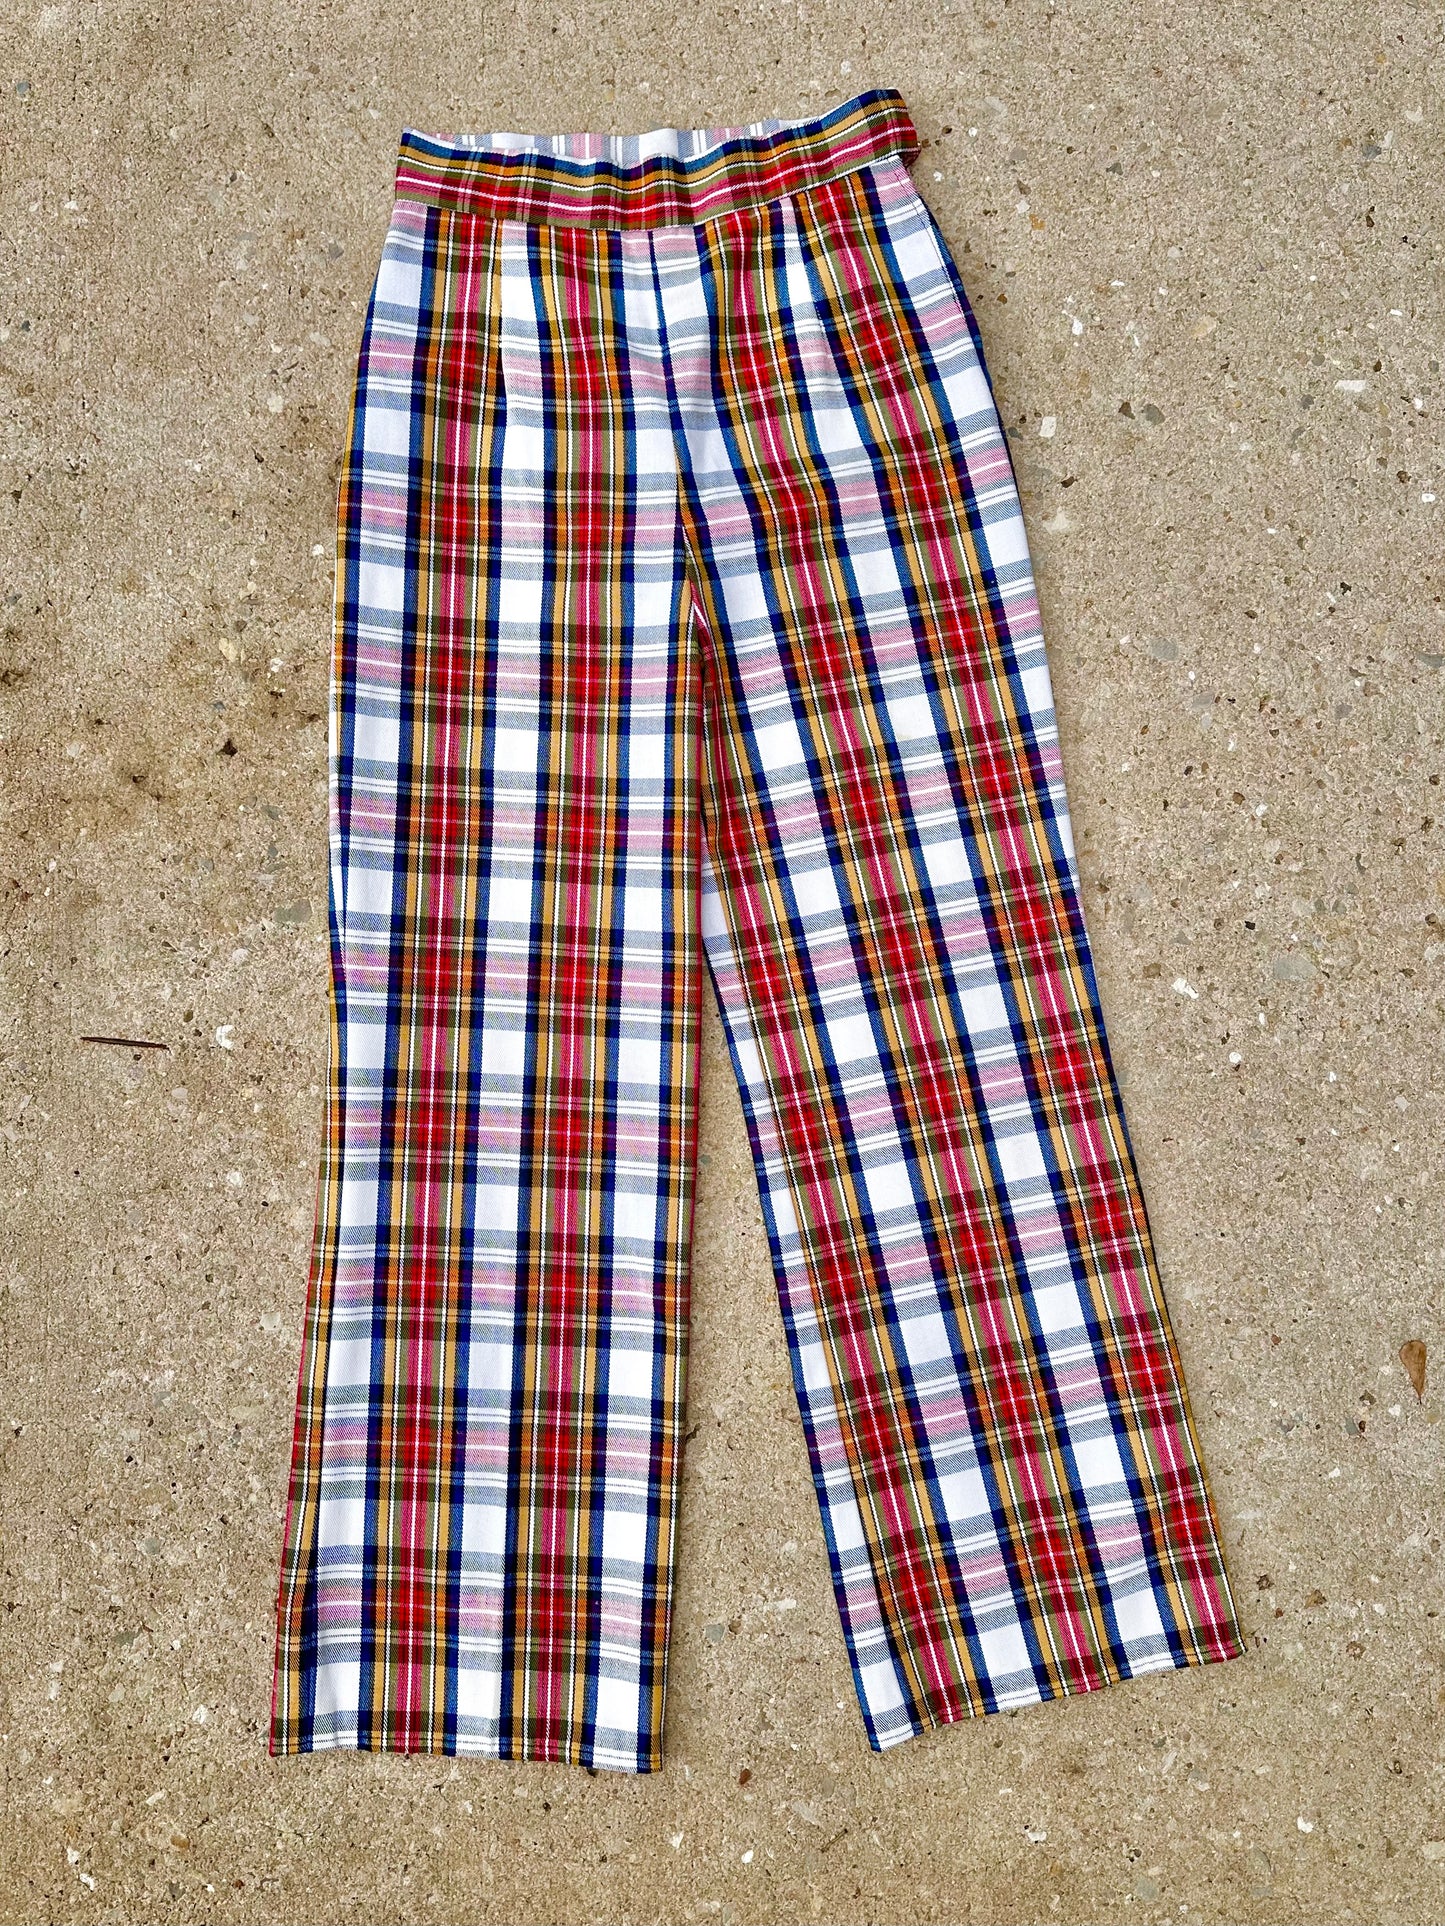 70s handmade plaid pants